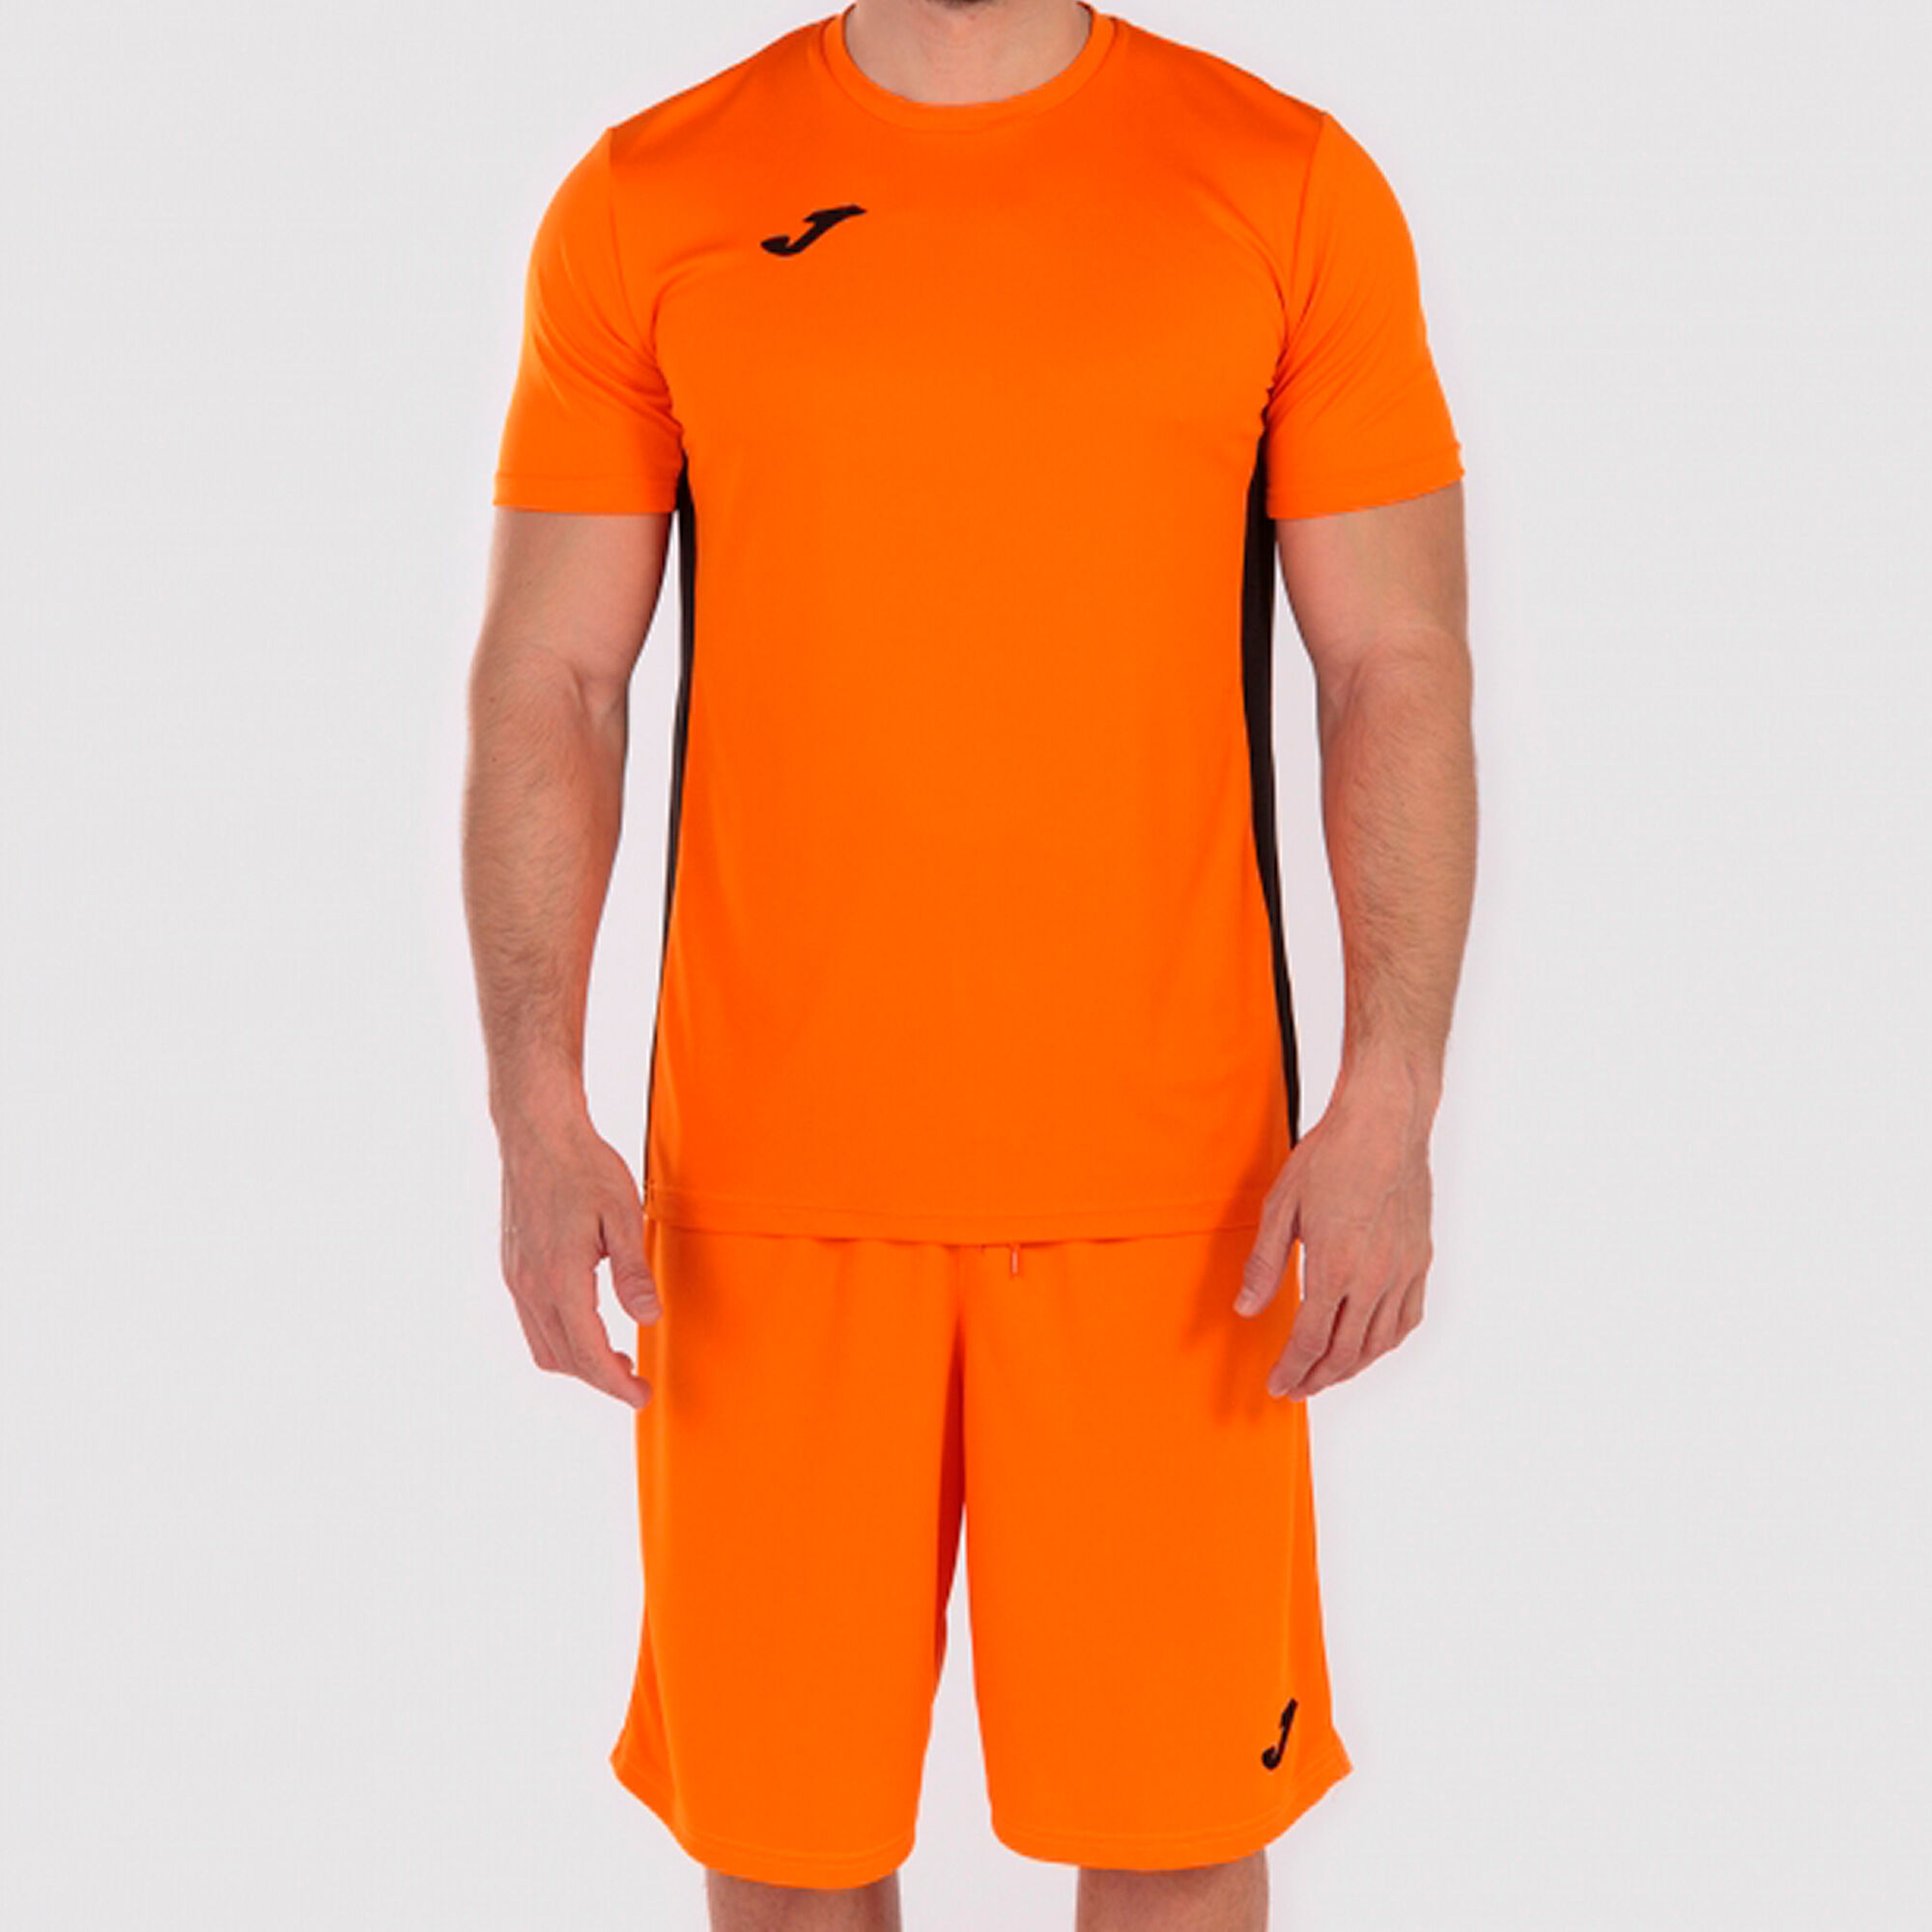 Camiseta manga corta hombre Cosenza naranja negro